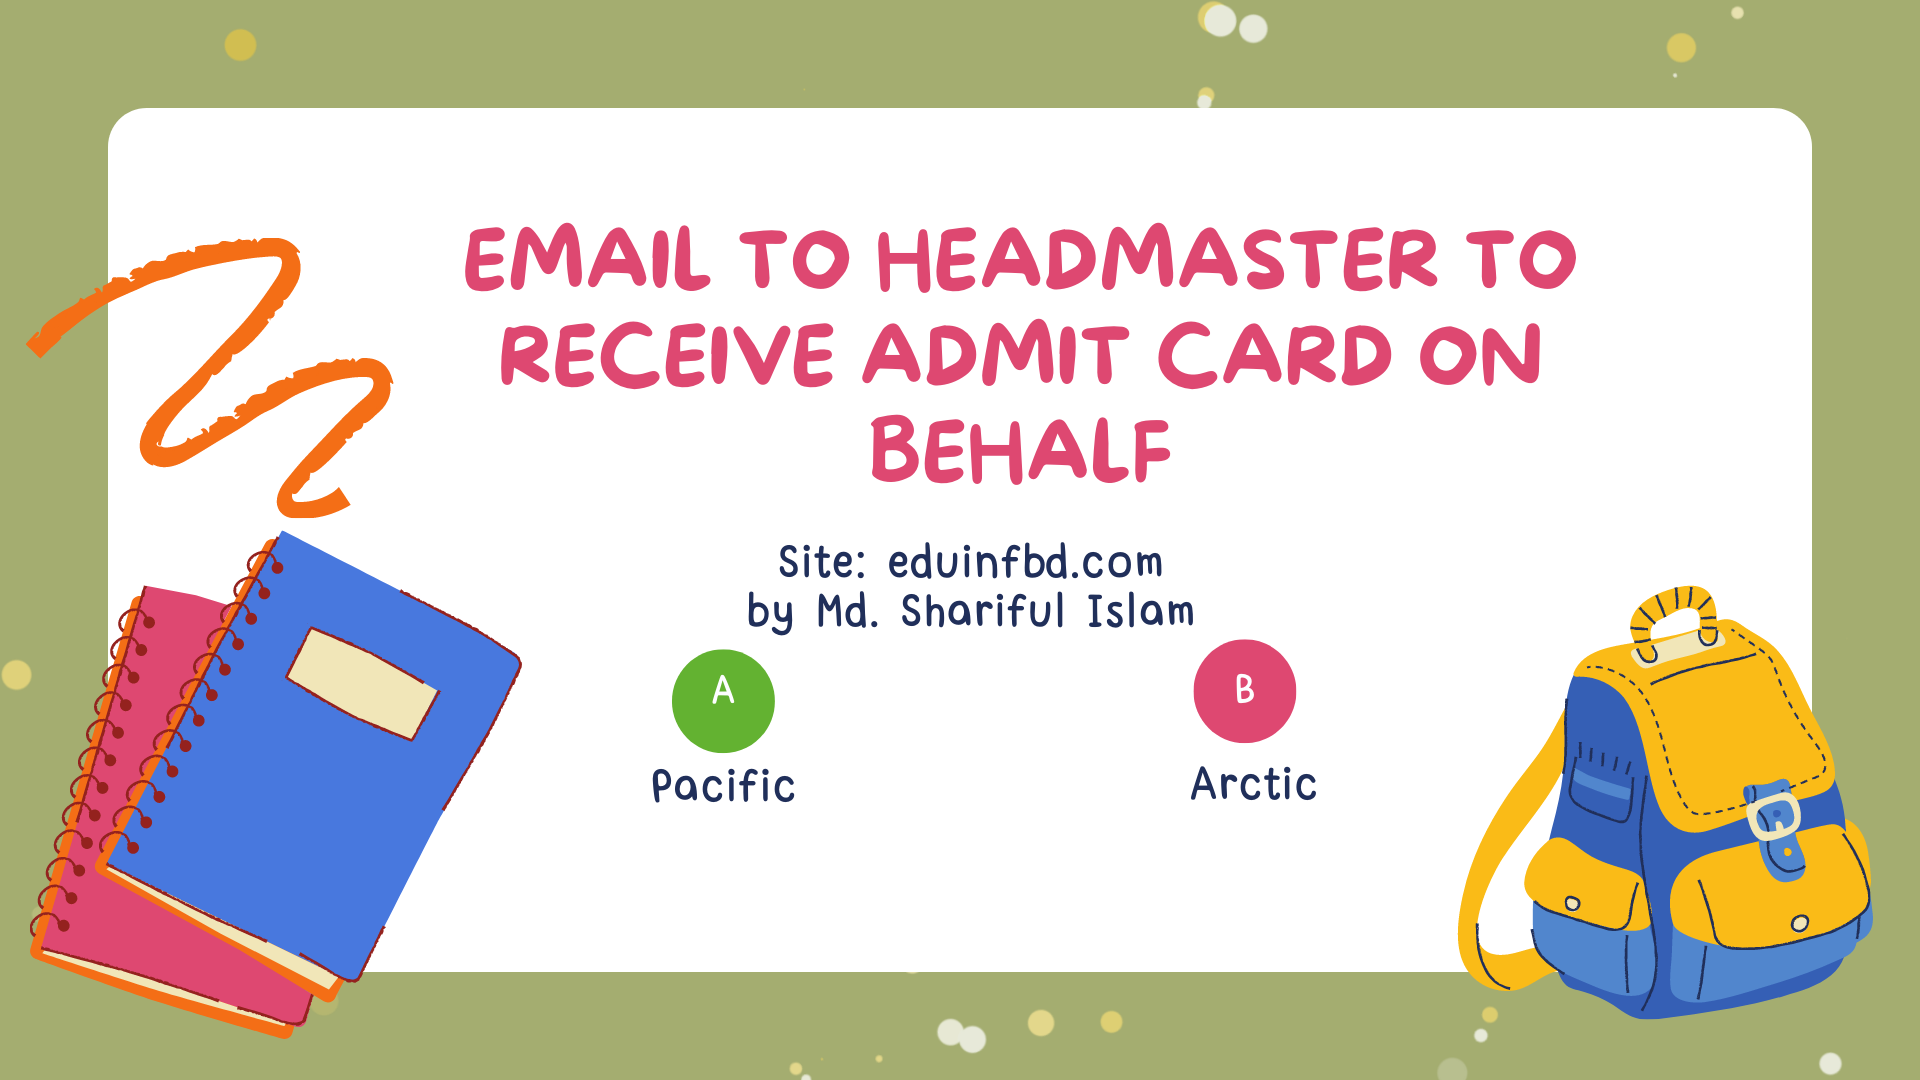 Email to Headmaster to receive admit card on behalf